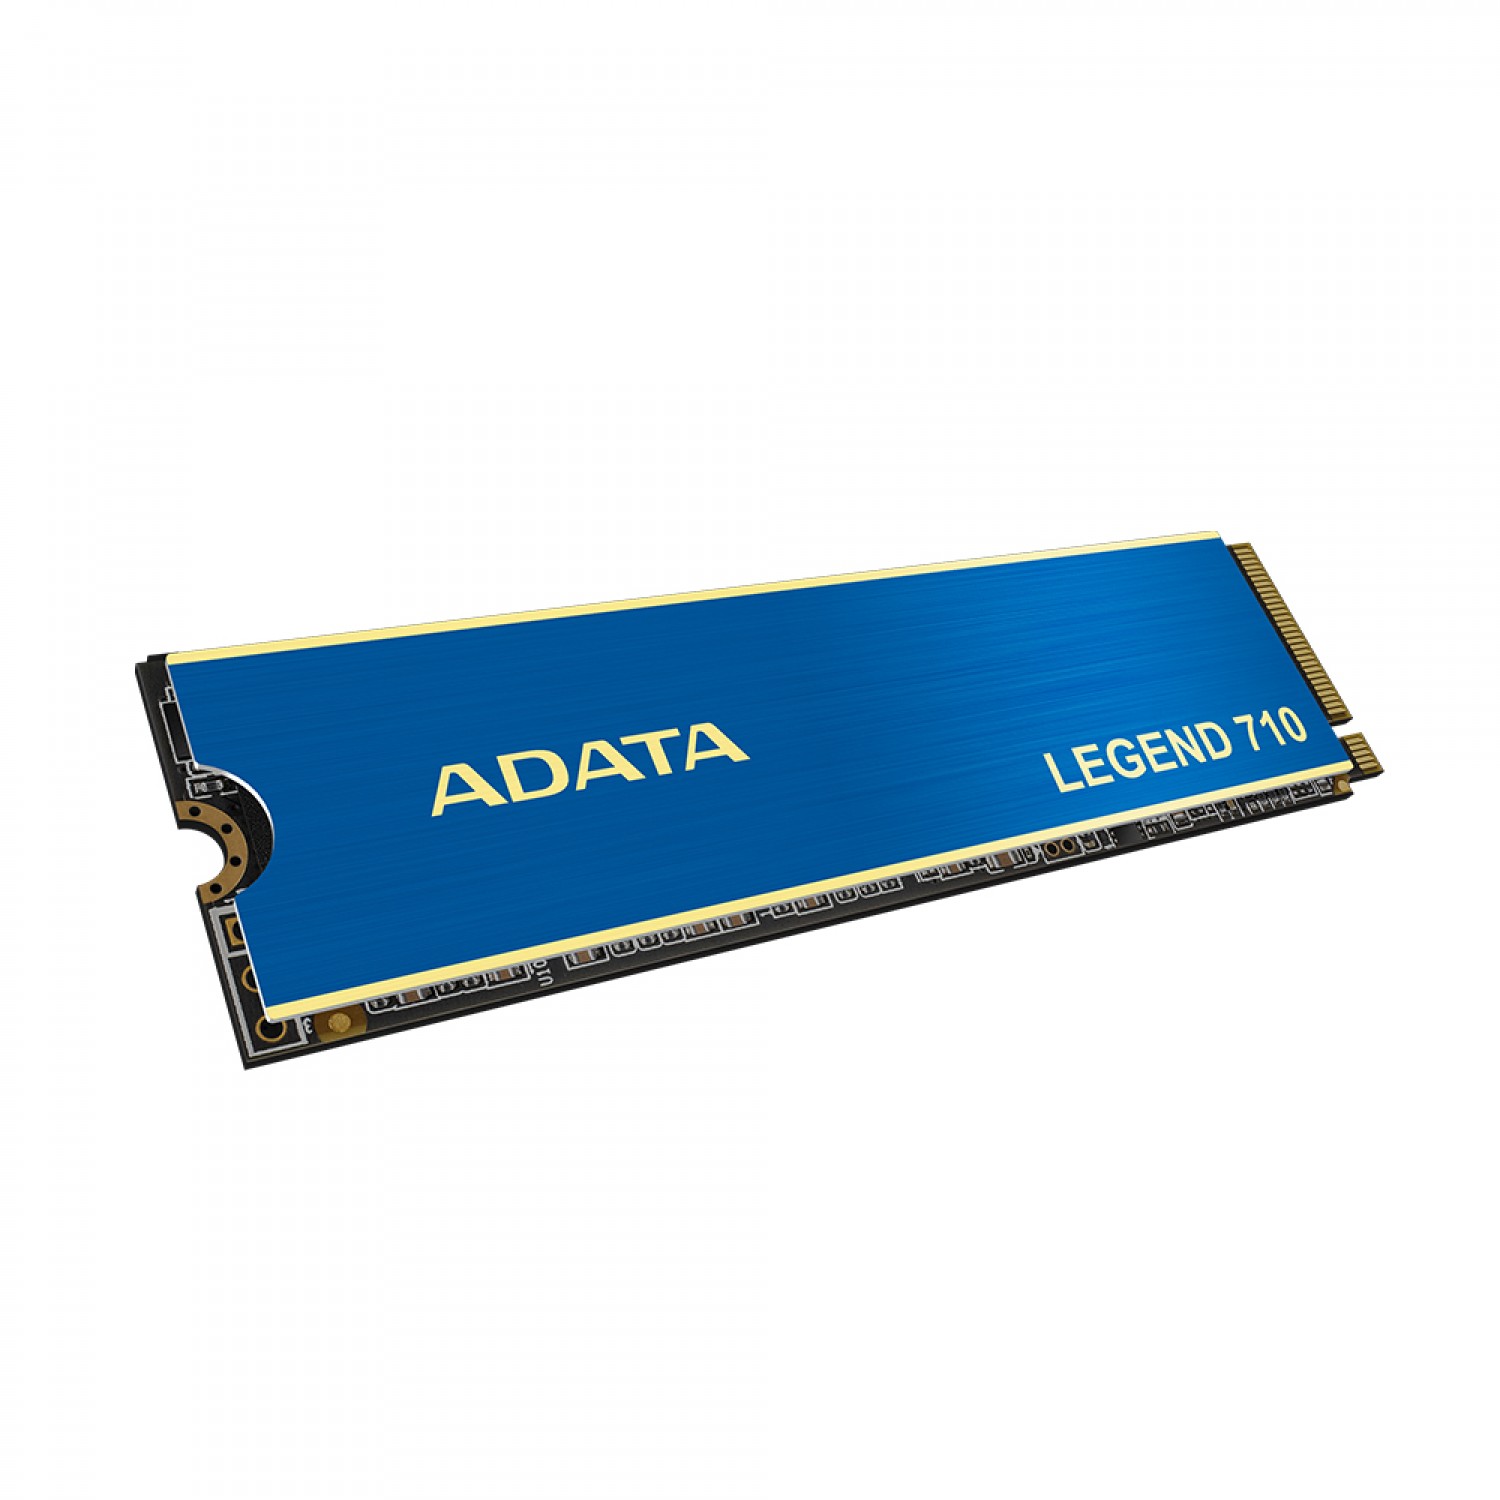 حافظه اس اس دی ADATA Legend 710 256GB-2